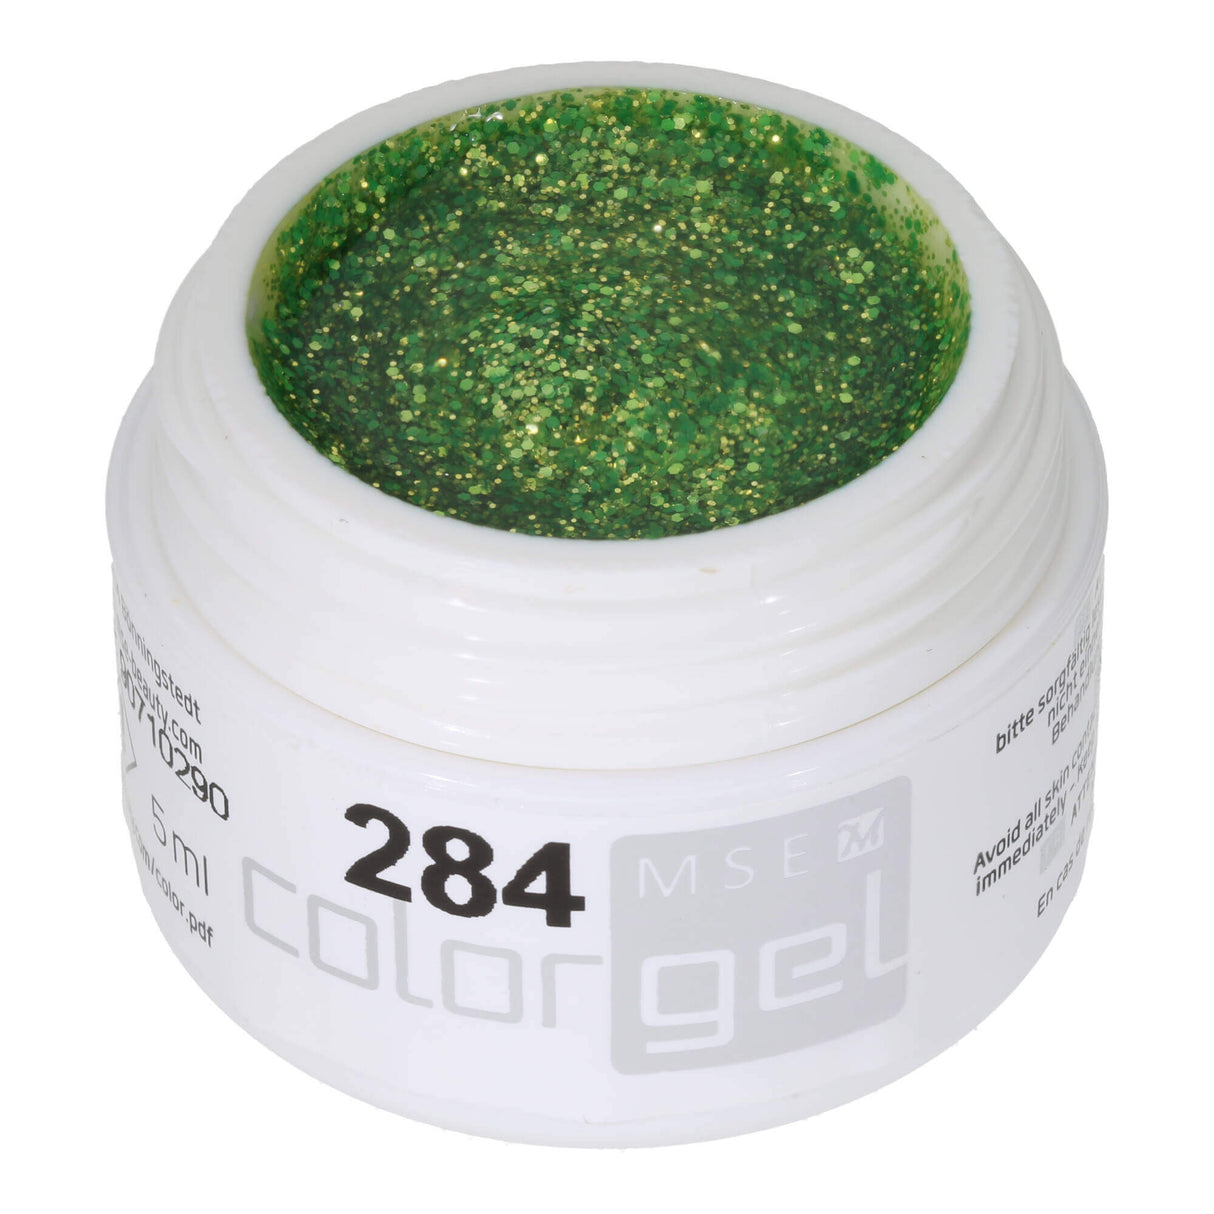 # 284 Premium-GLITTER Color Gel 5ml green with green-gold glitter